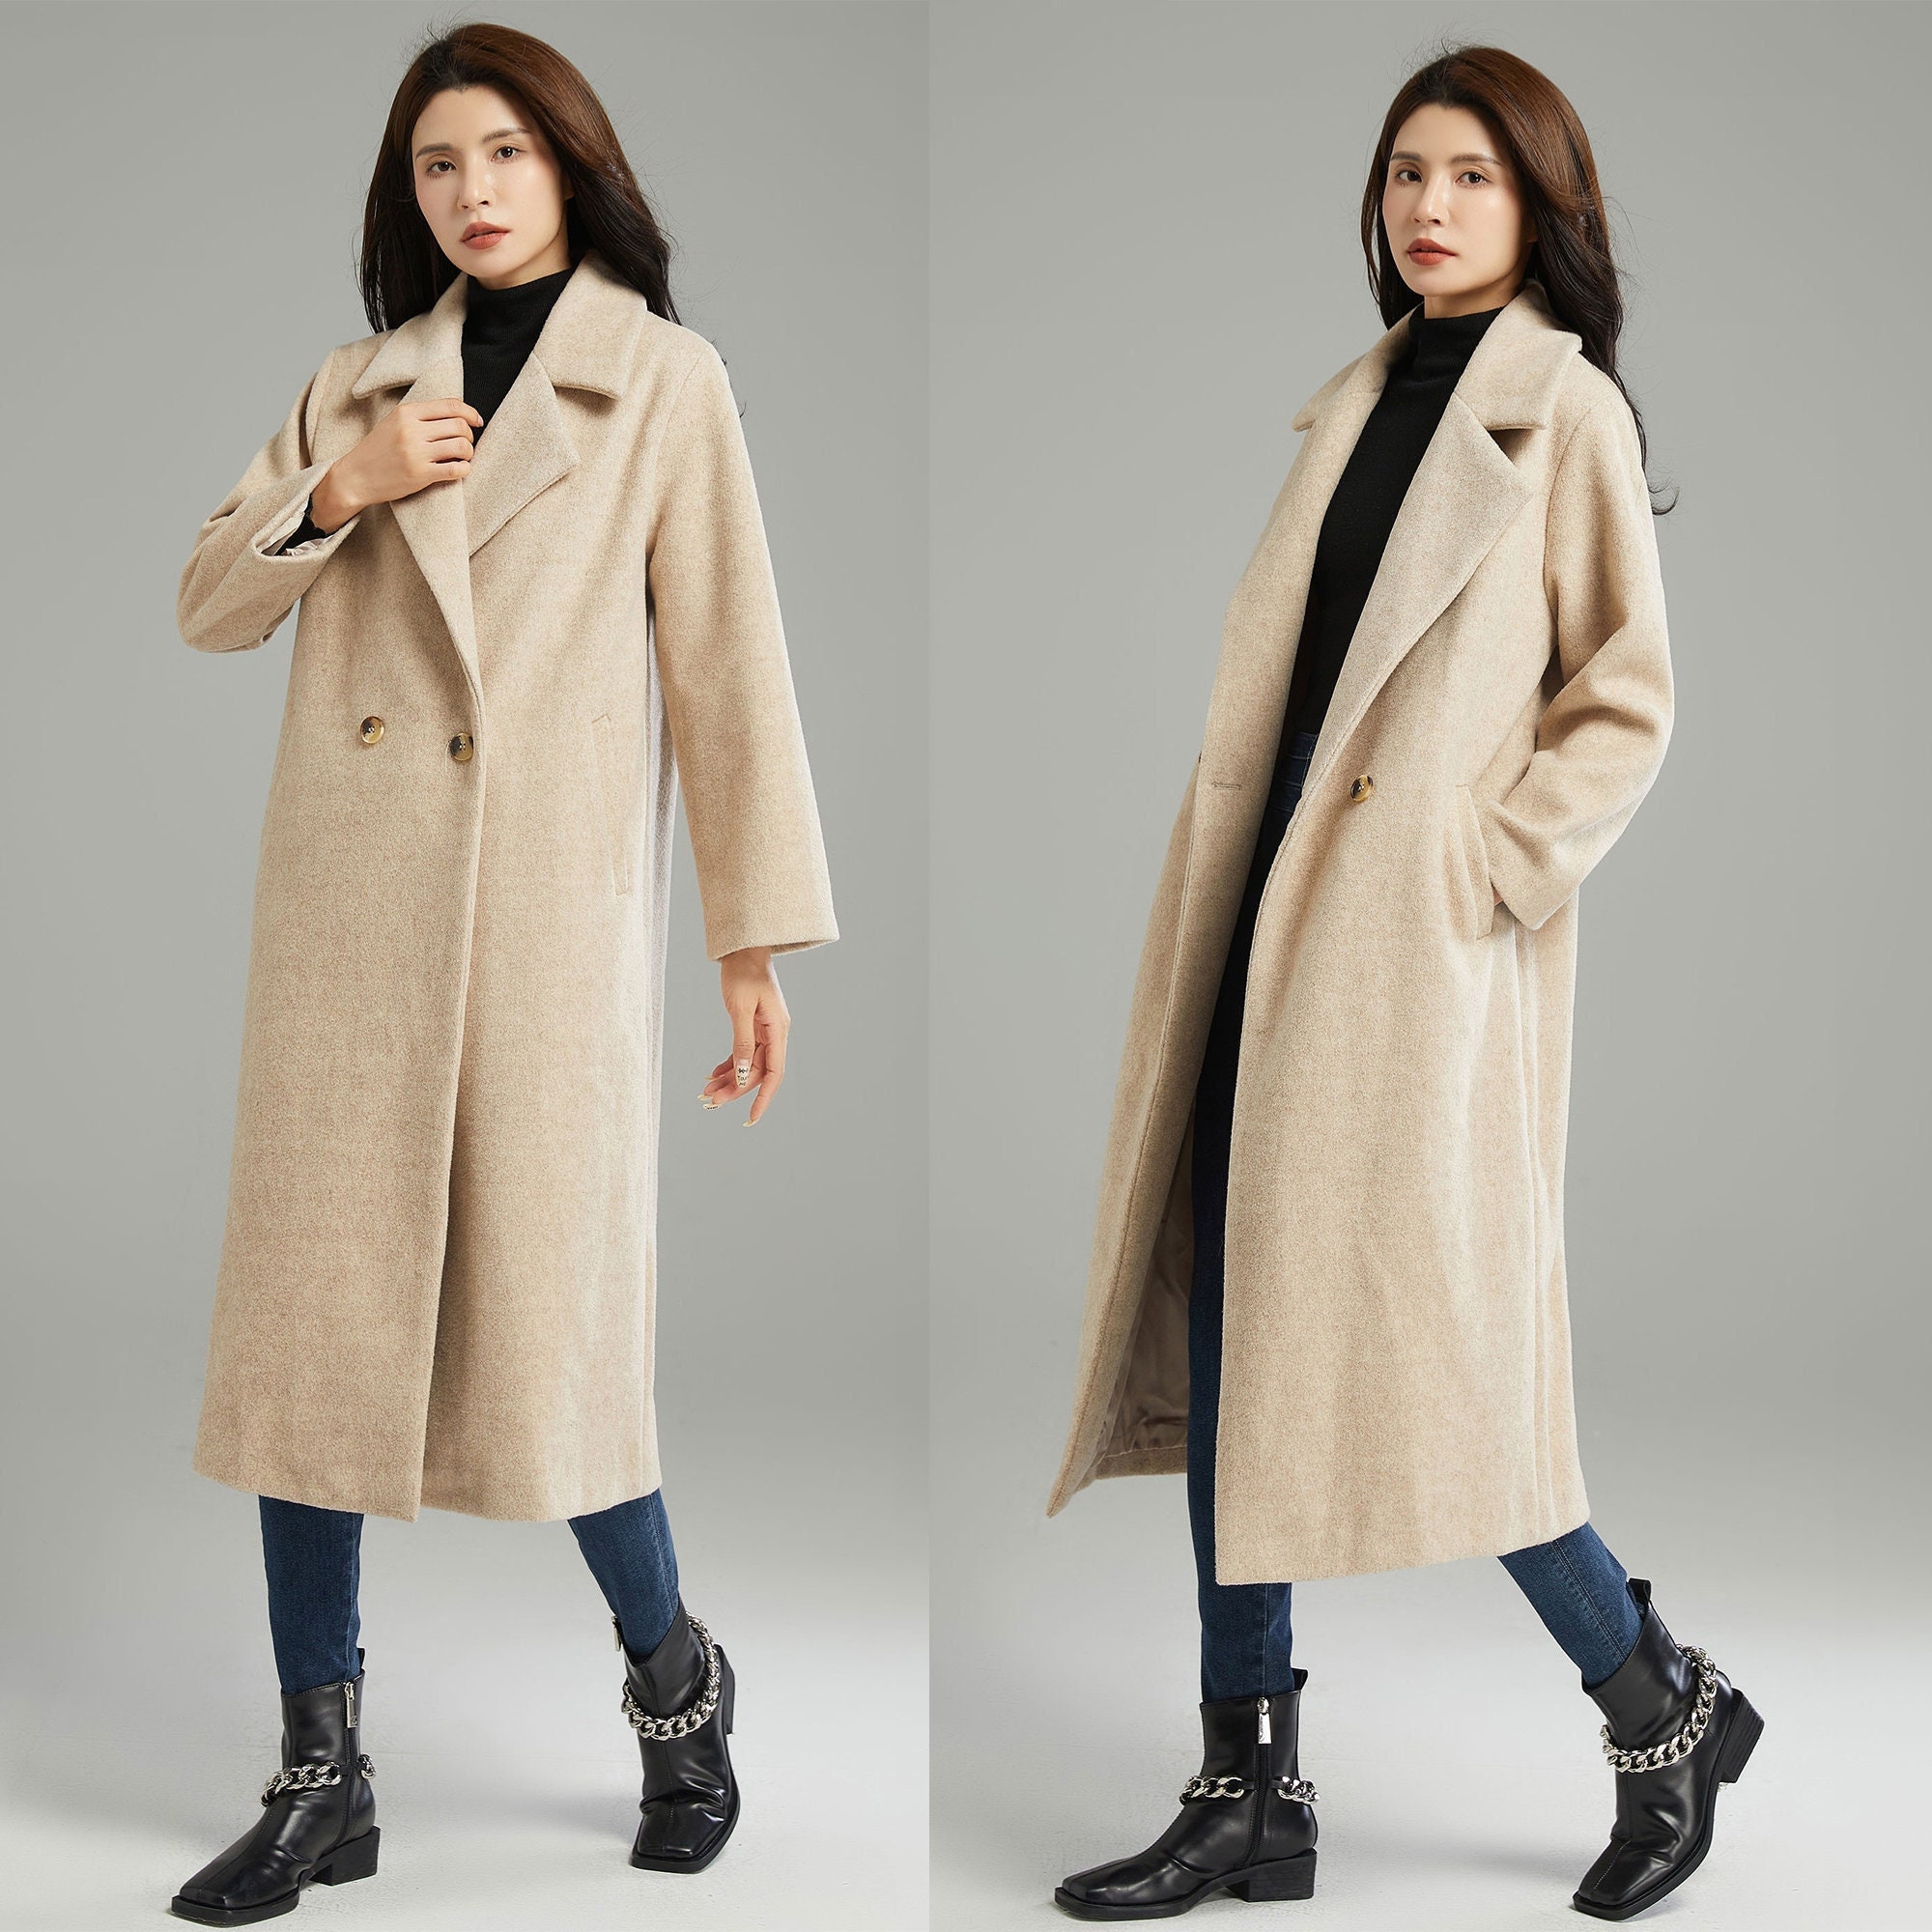 Asymmetrical Wool Coat in Black, Winter Coat Women, Wool Coat, High Collar  Wool Coat, Plus Size Coat, Womens Autumn Winter Outfit C987 -  Canada